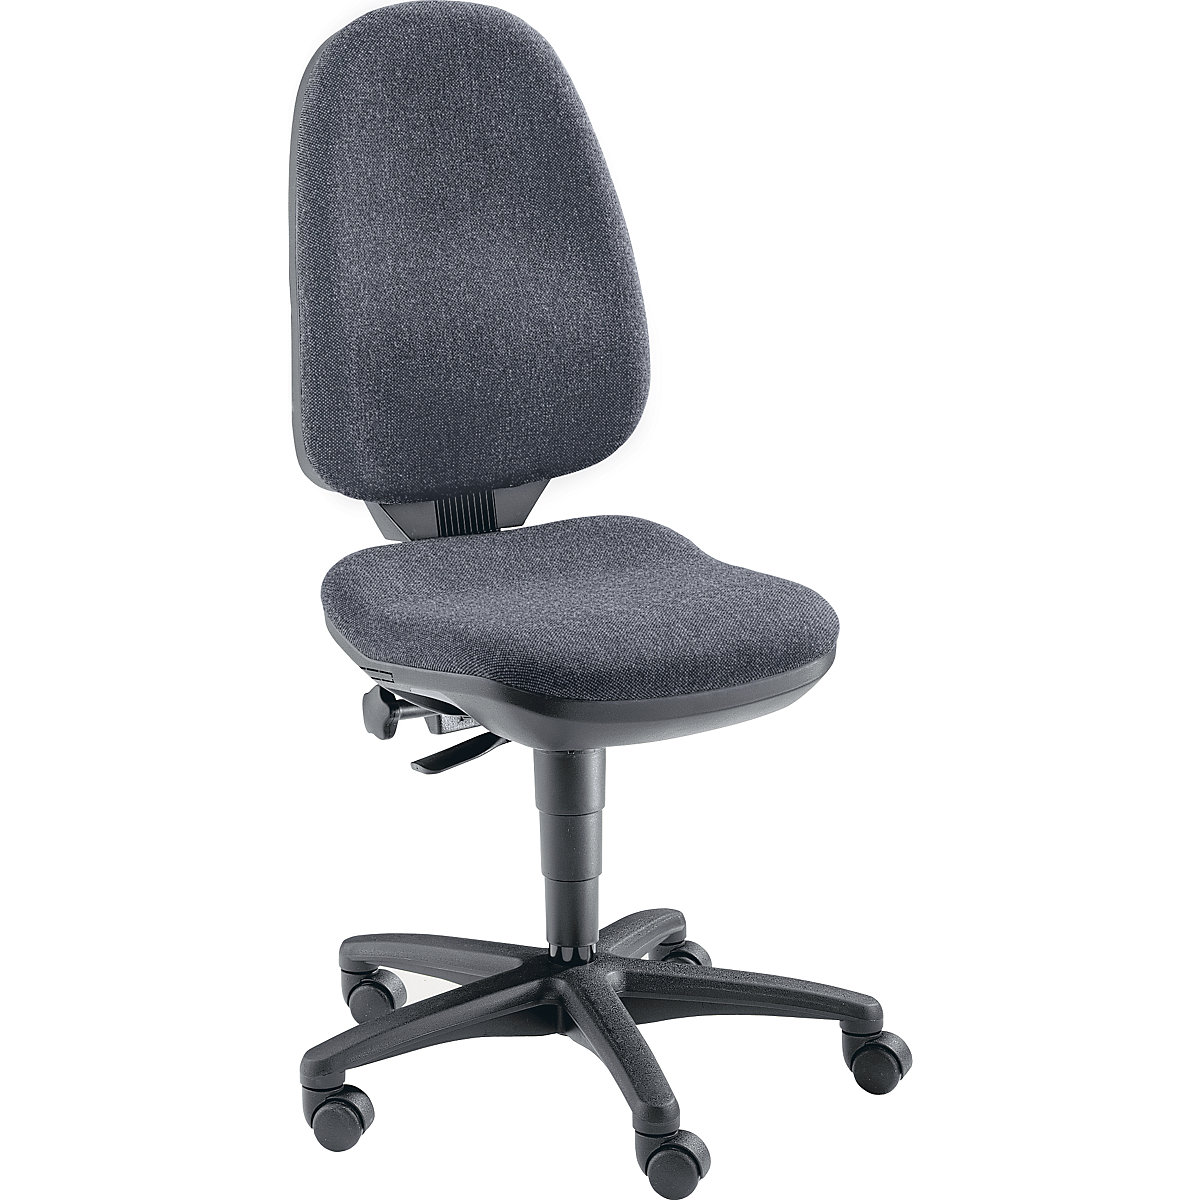 Ergonomic swivel chair – Topstar